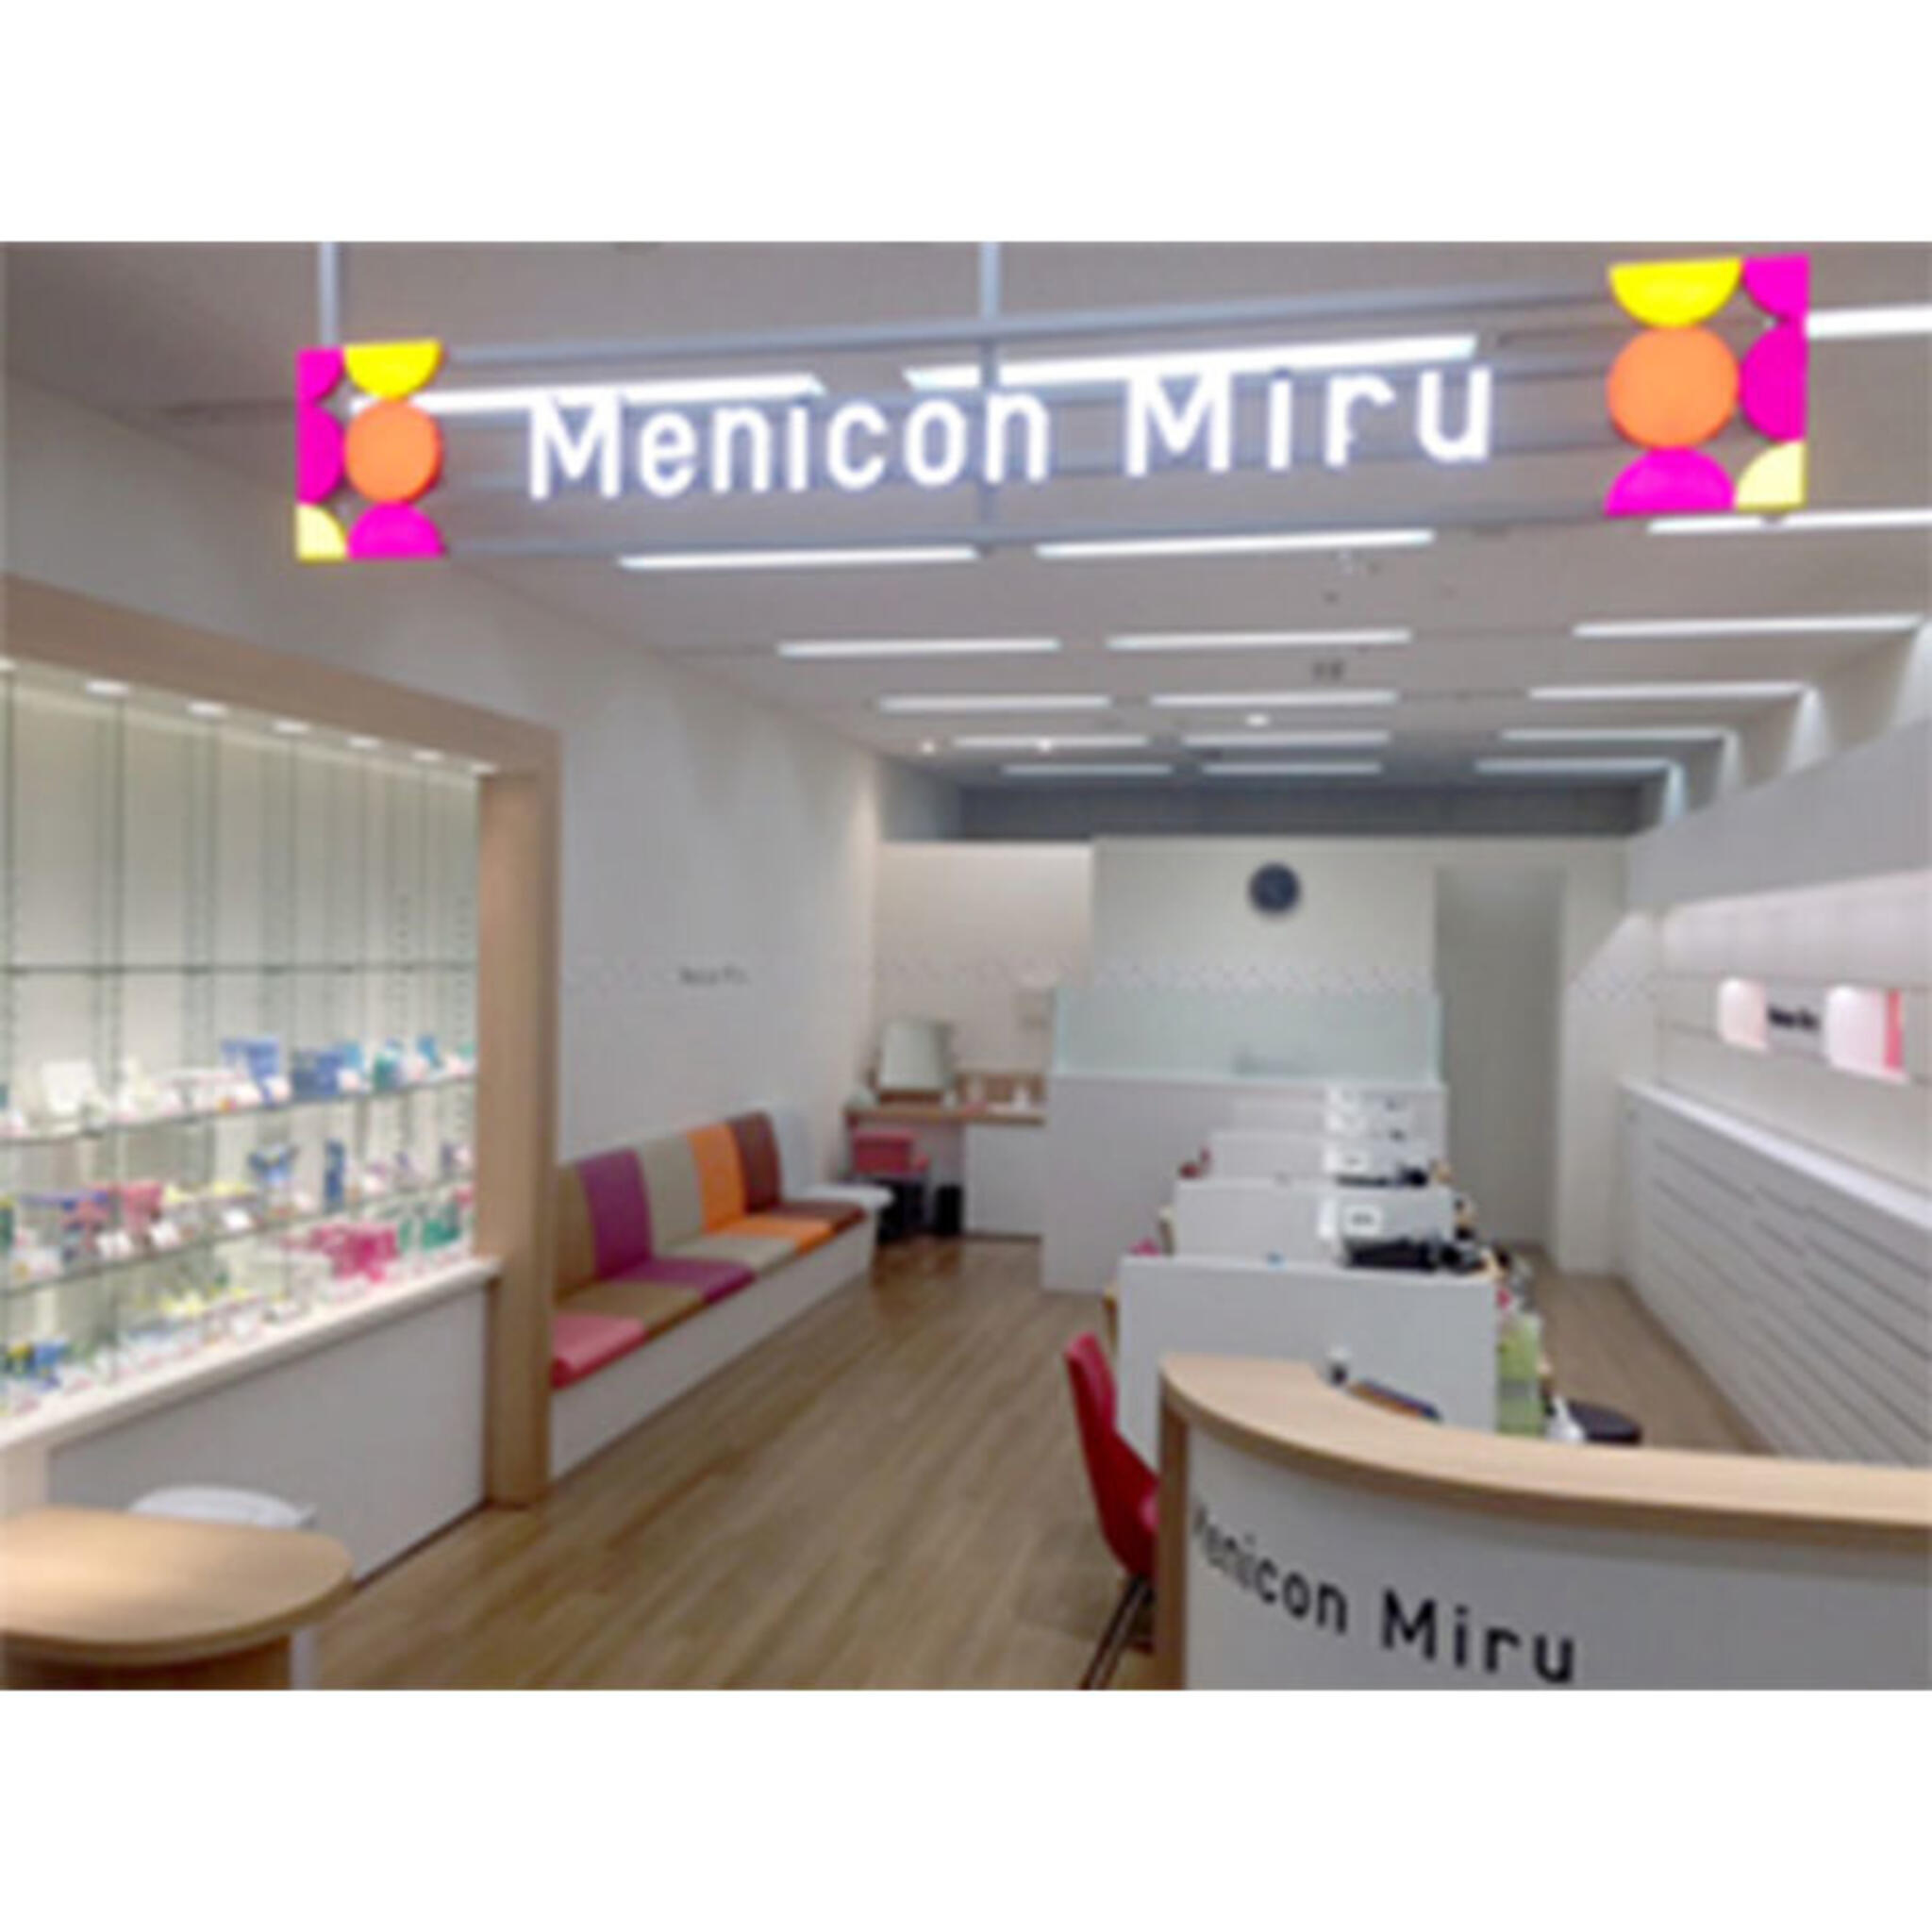 Menicon Miruミッドランド店の代表写真3